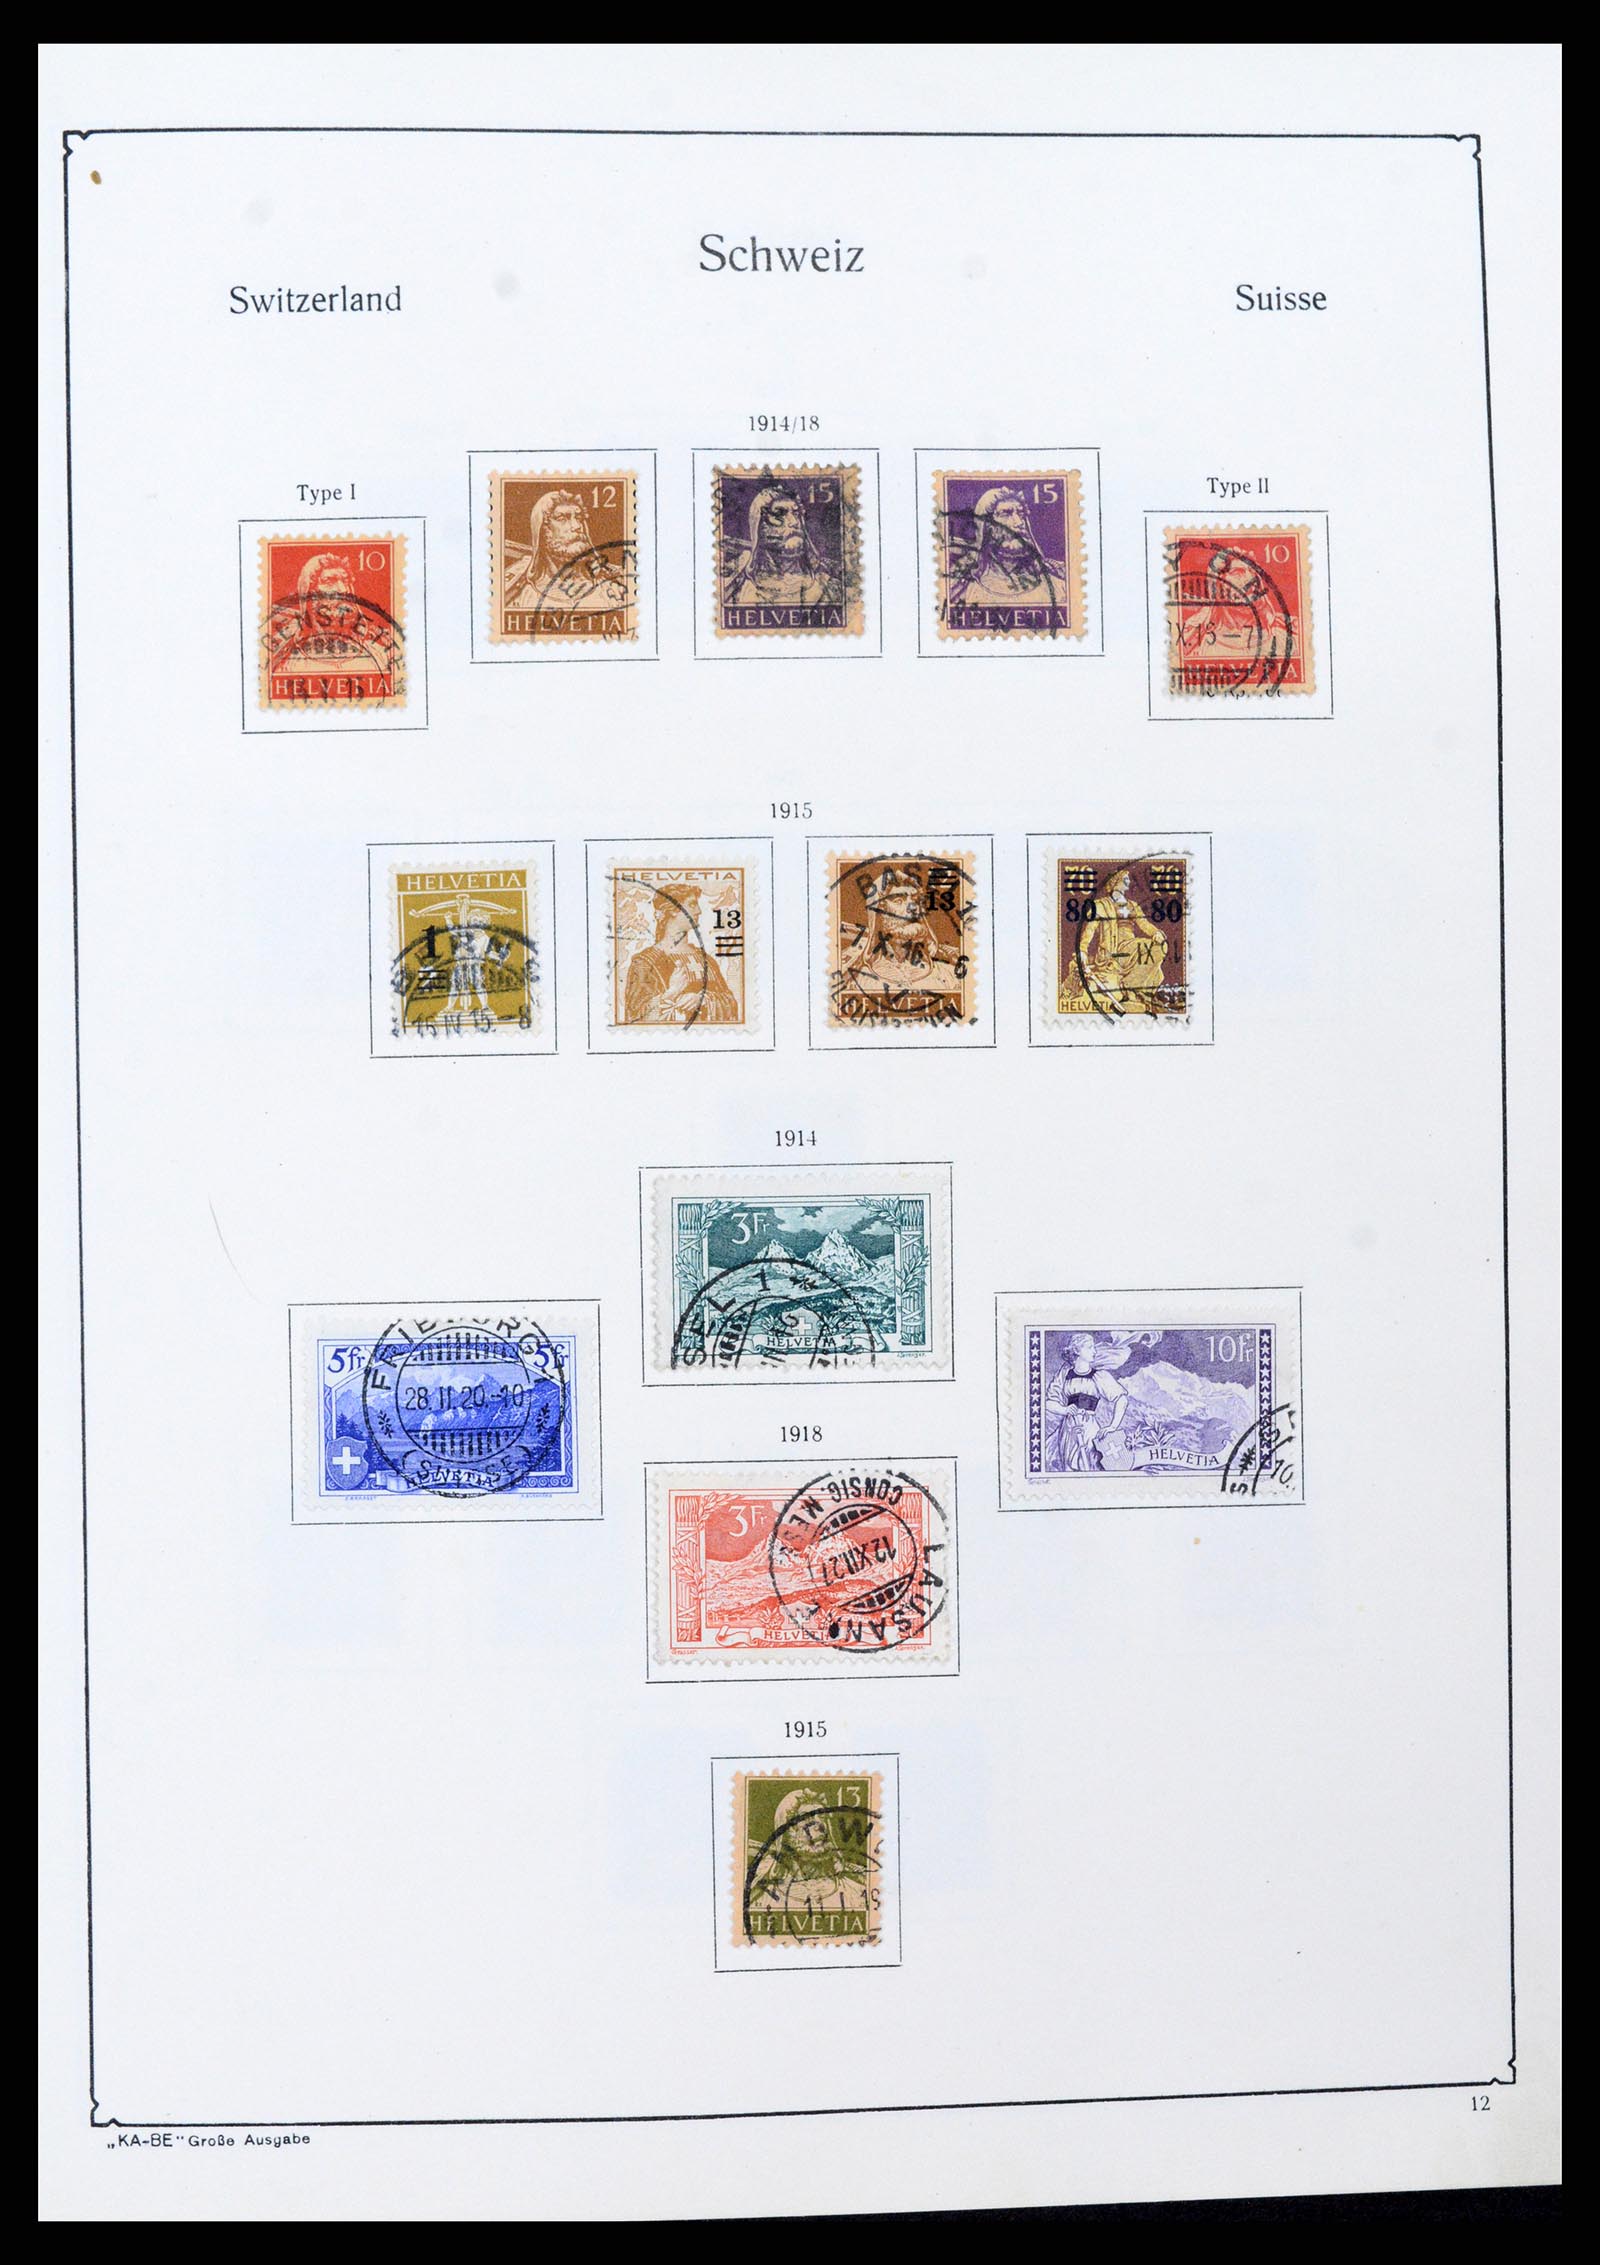 37588 011 - Stamp collection 37588 Switzerland 1854-1974.